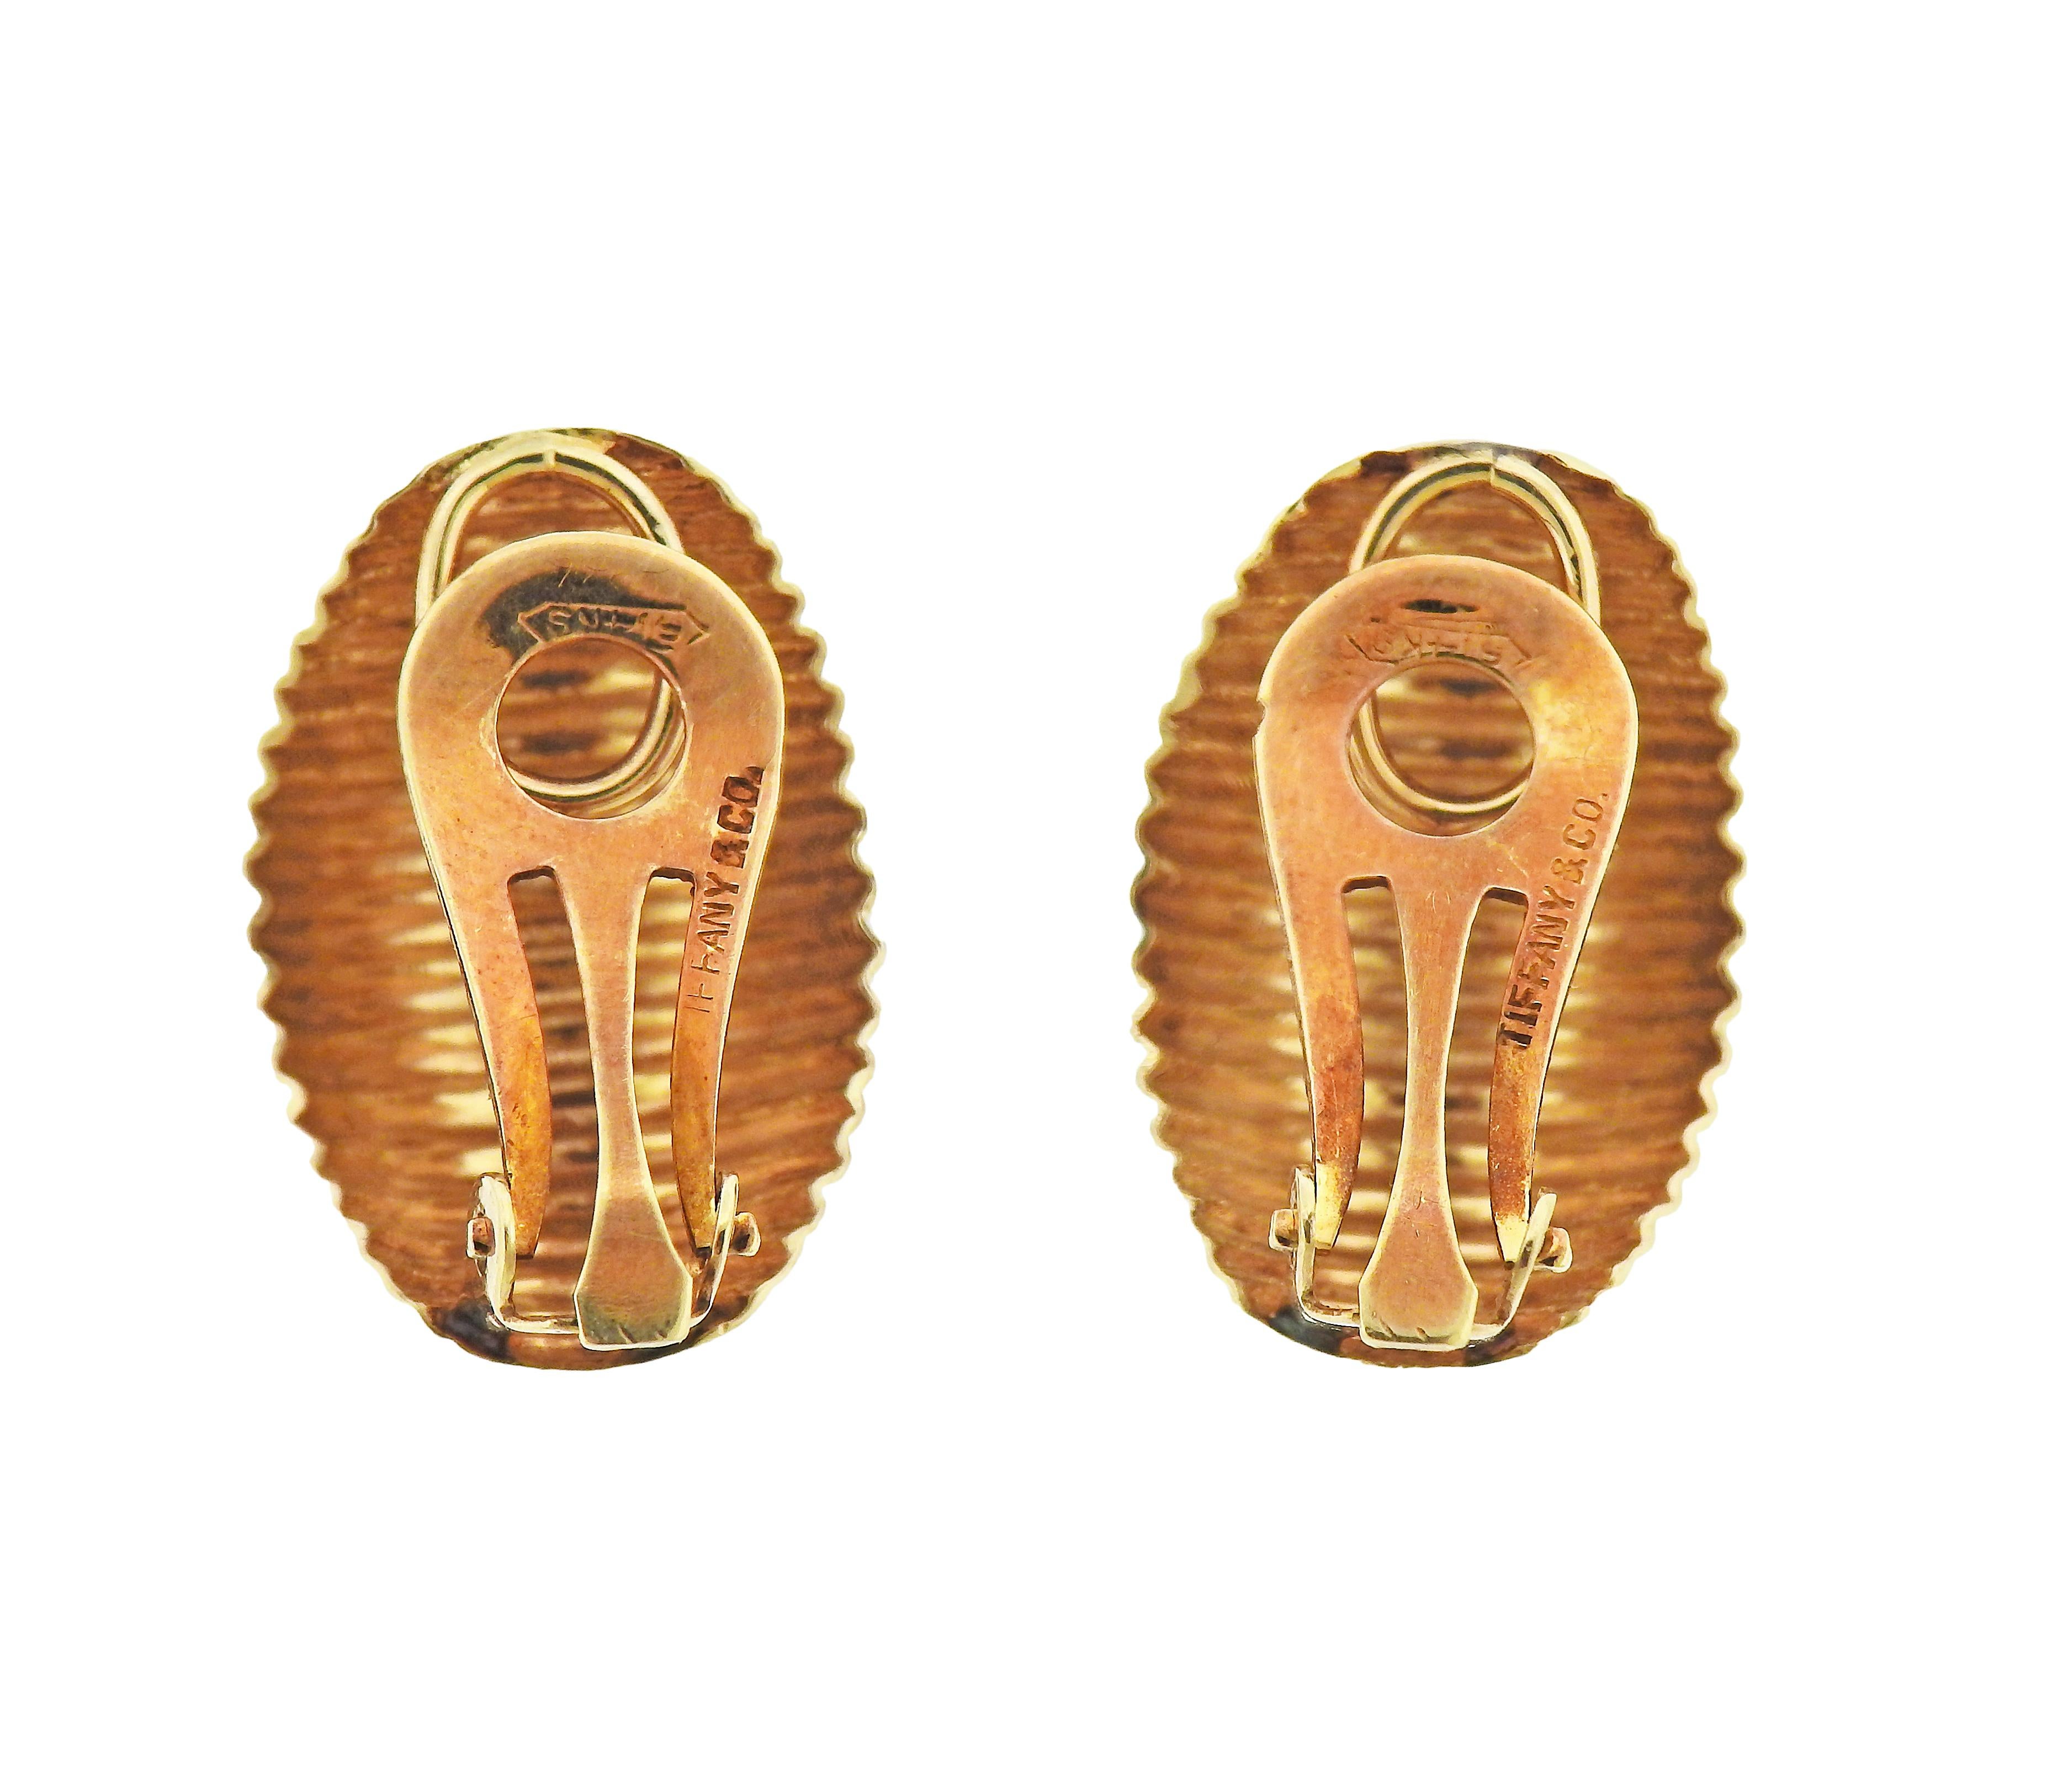 Pair of mid century 14k gold half hoop earrings by Tiffany & Co. Earring measure 22mm x 15mm. Marked: Tiffany & Co, 14k. Weight - 6.2 grams.